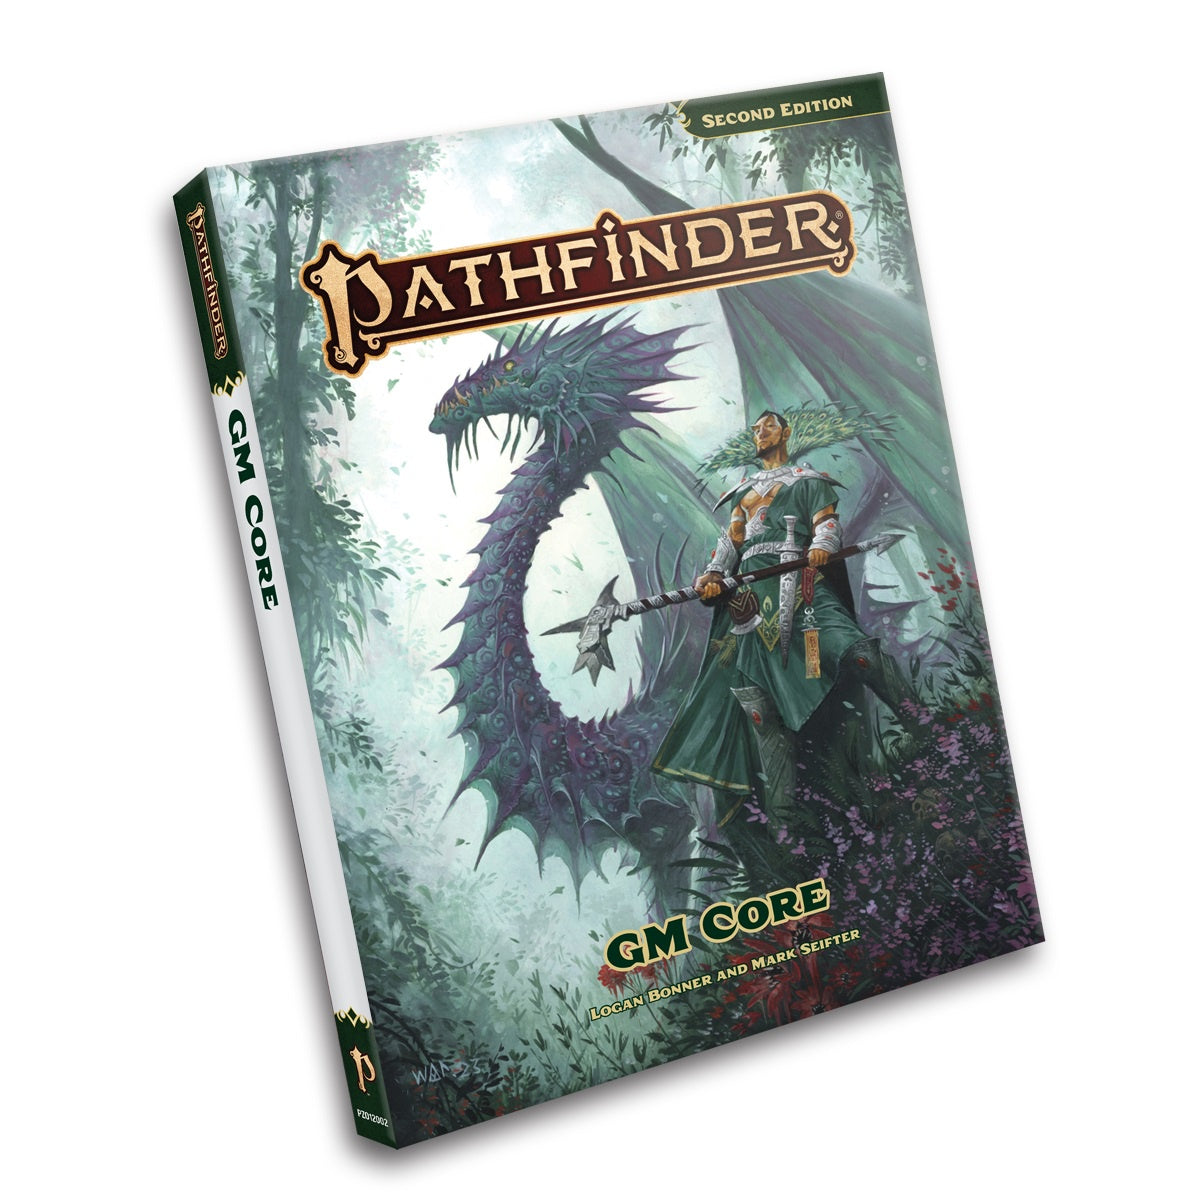 Pathfinder Second Edition Remaster: GM Core Pocket Edition (Preorder)